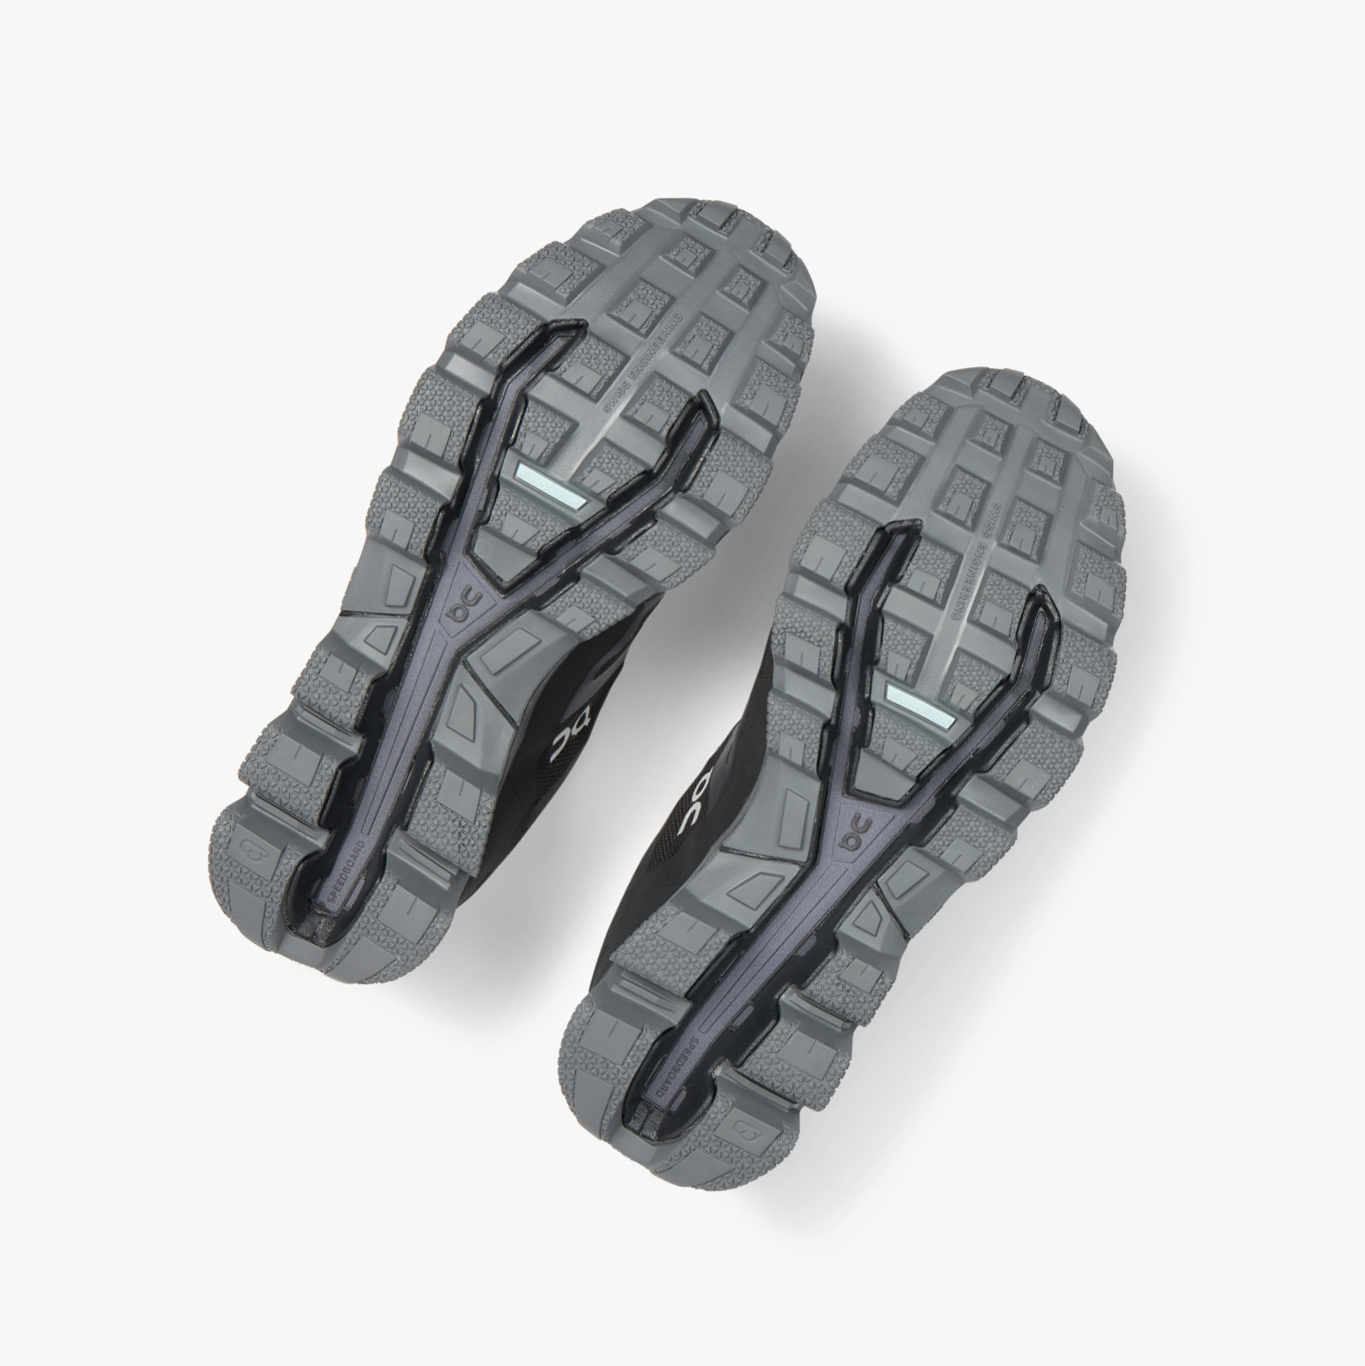 Men's QC Cloudventure Waterproof Trail Running Shoes Black | 486-LDPWFT